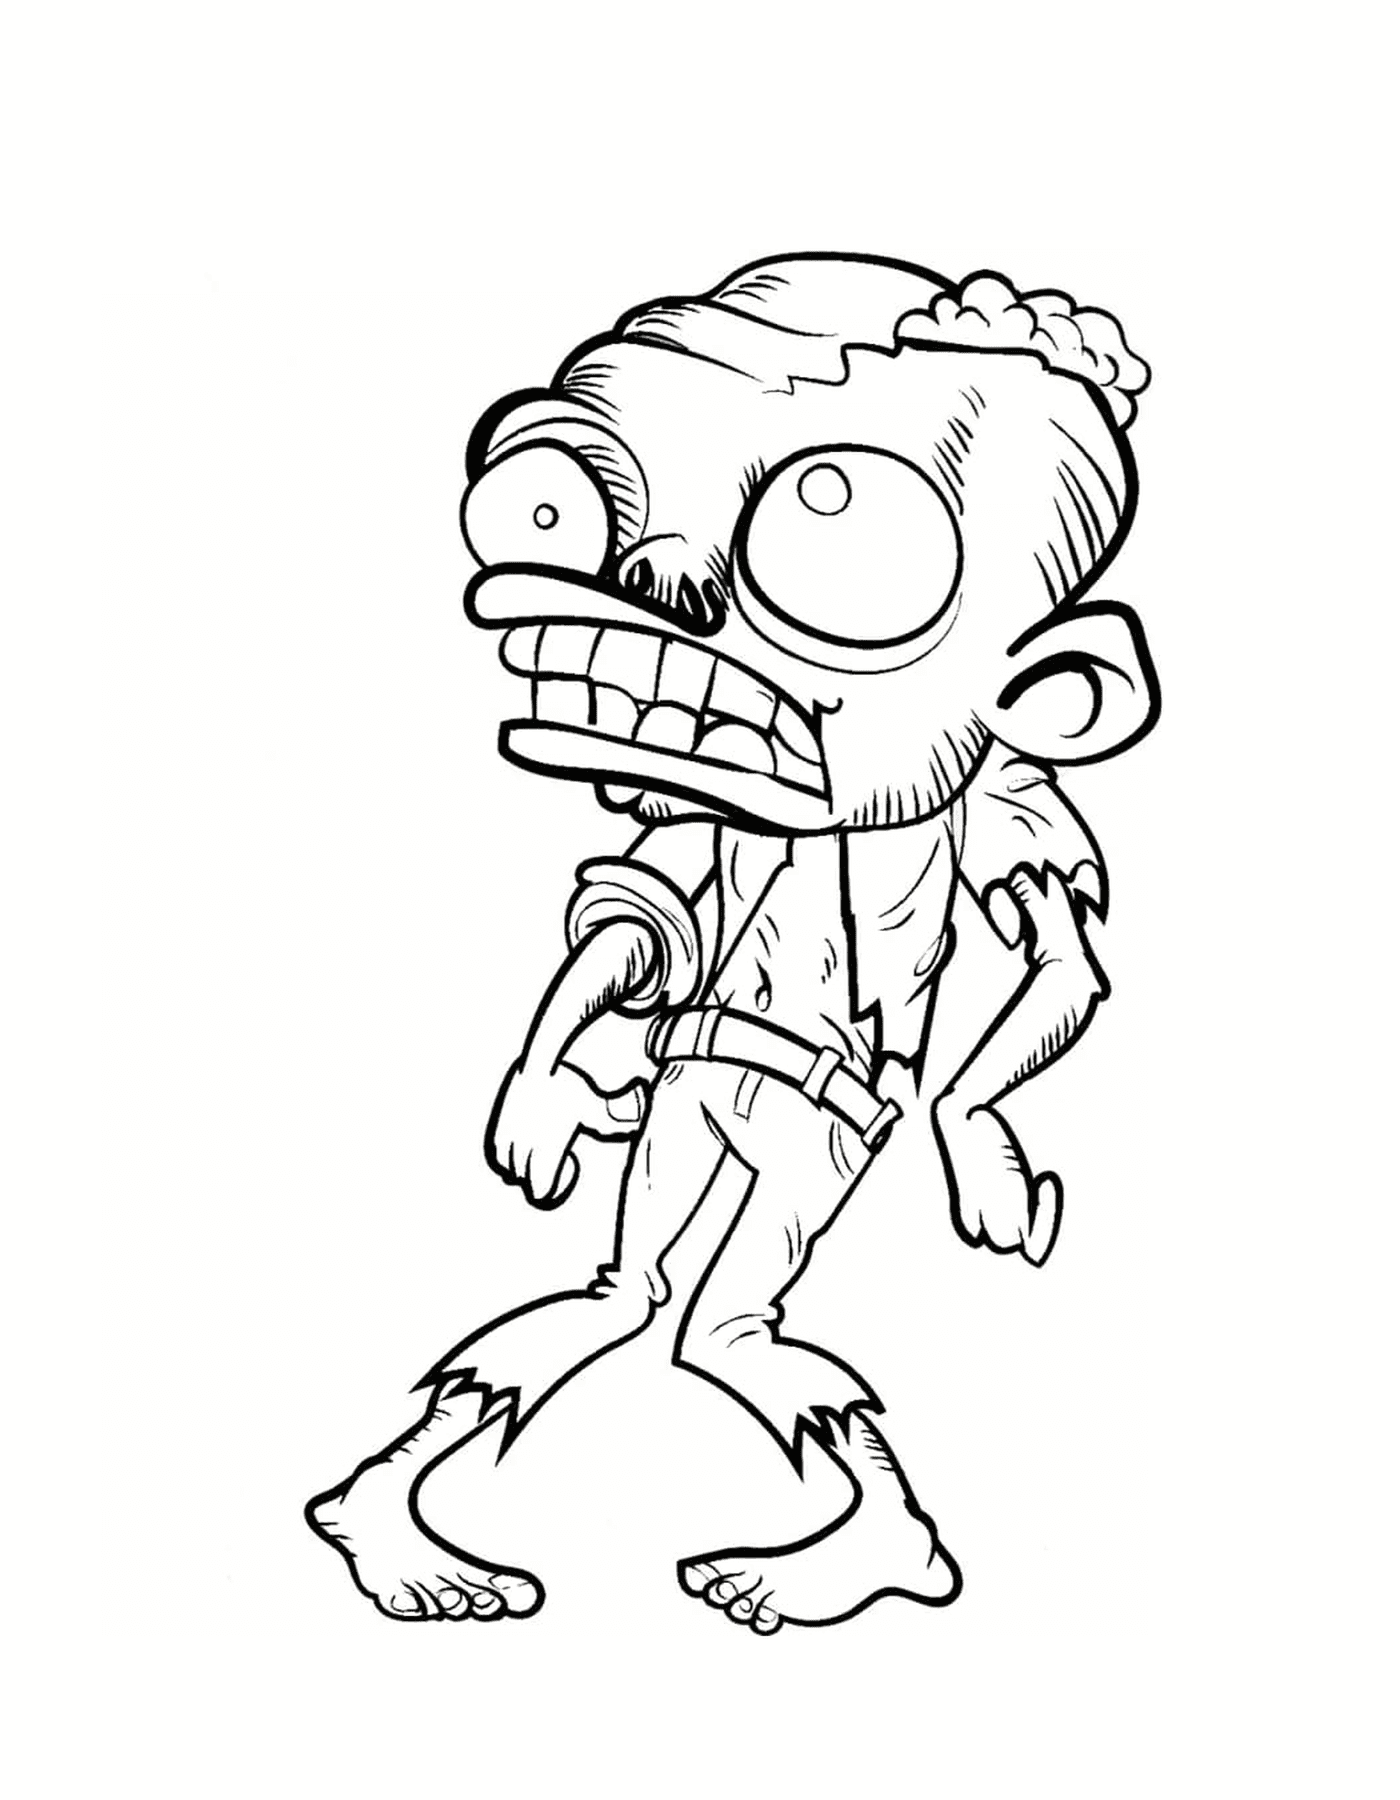   Un zombie vraiment moche 